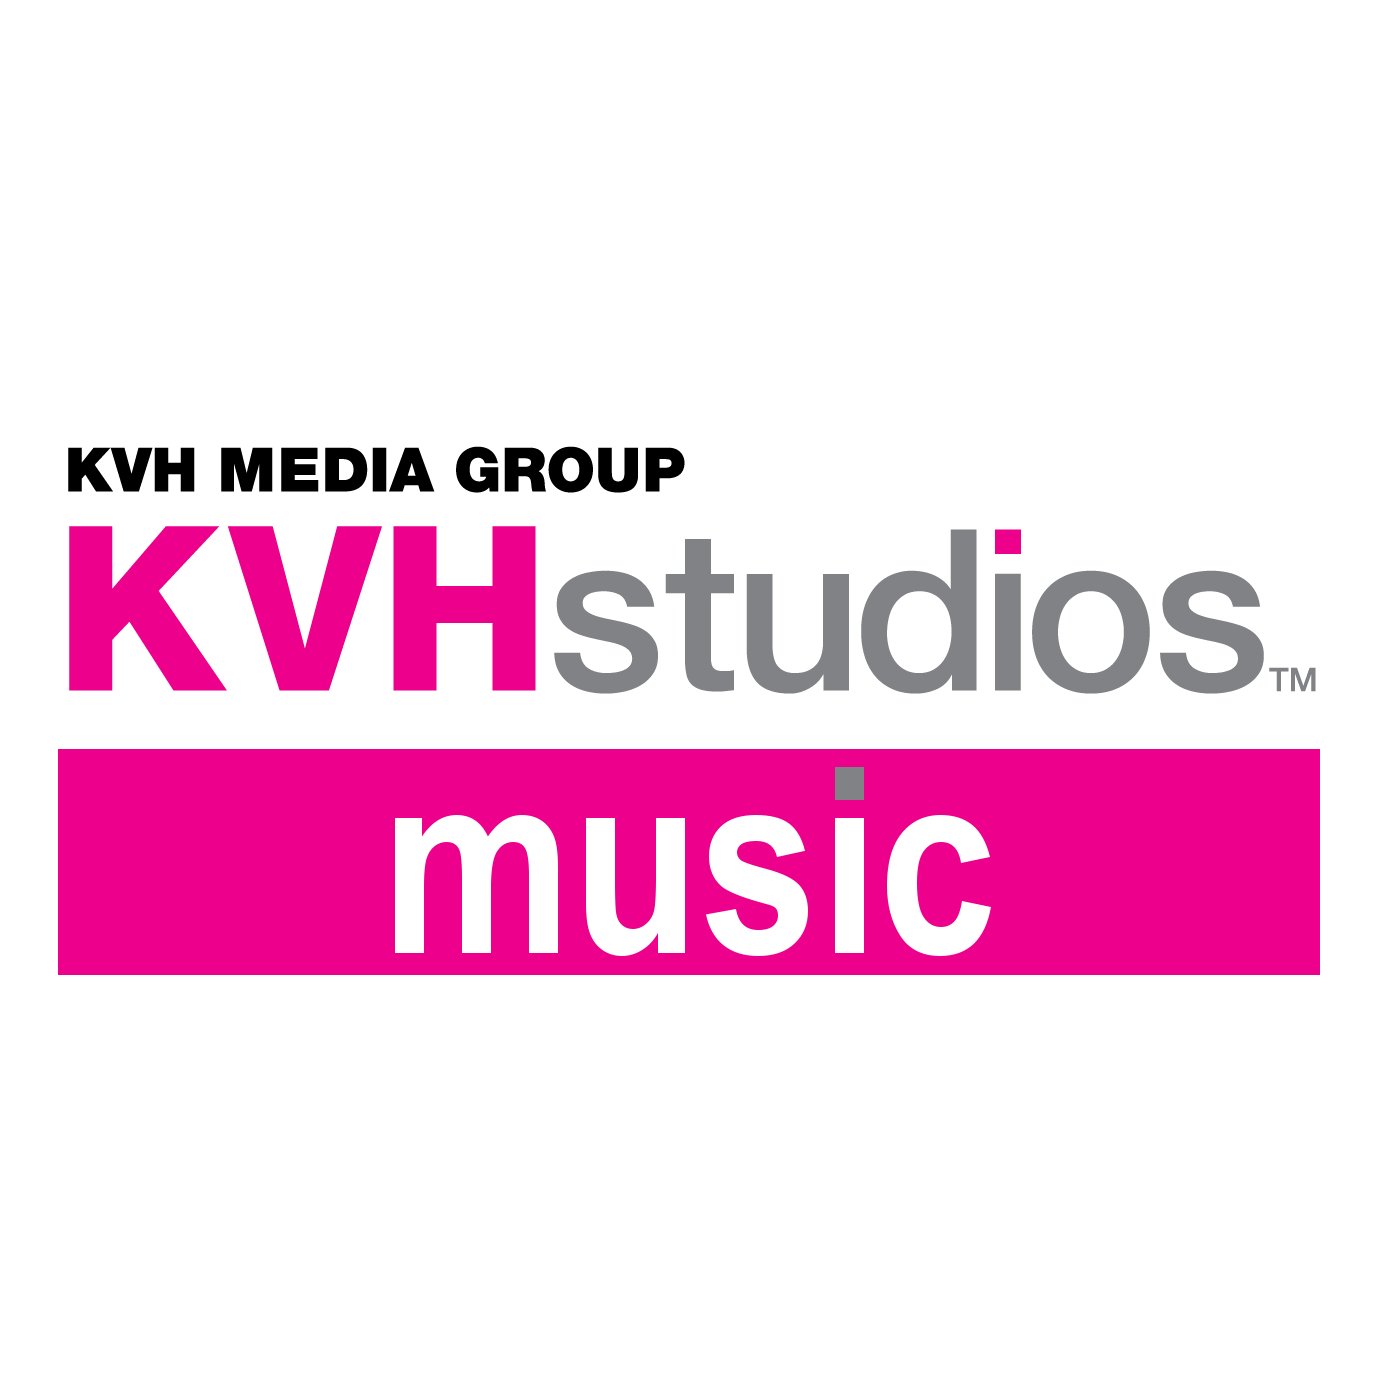 radio advertising ideas by KVH Studios 